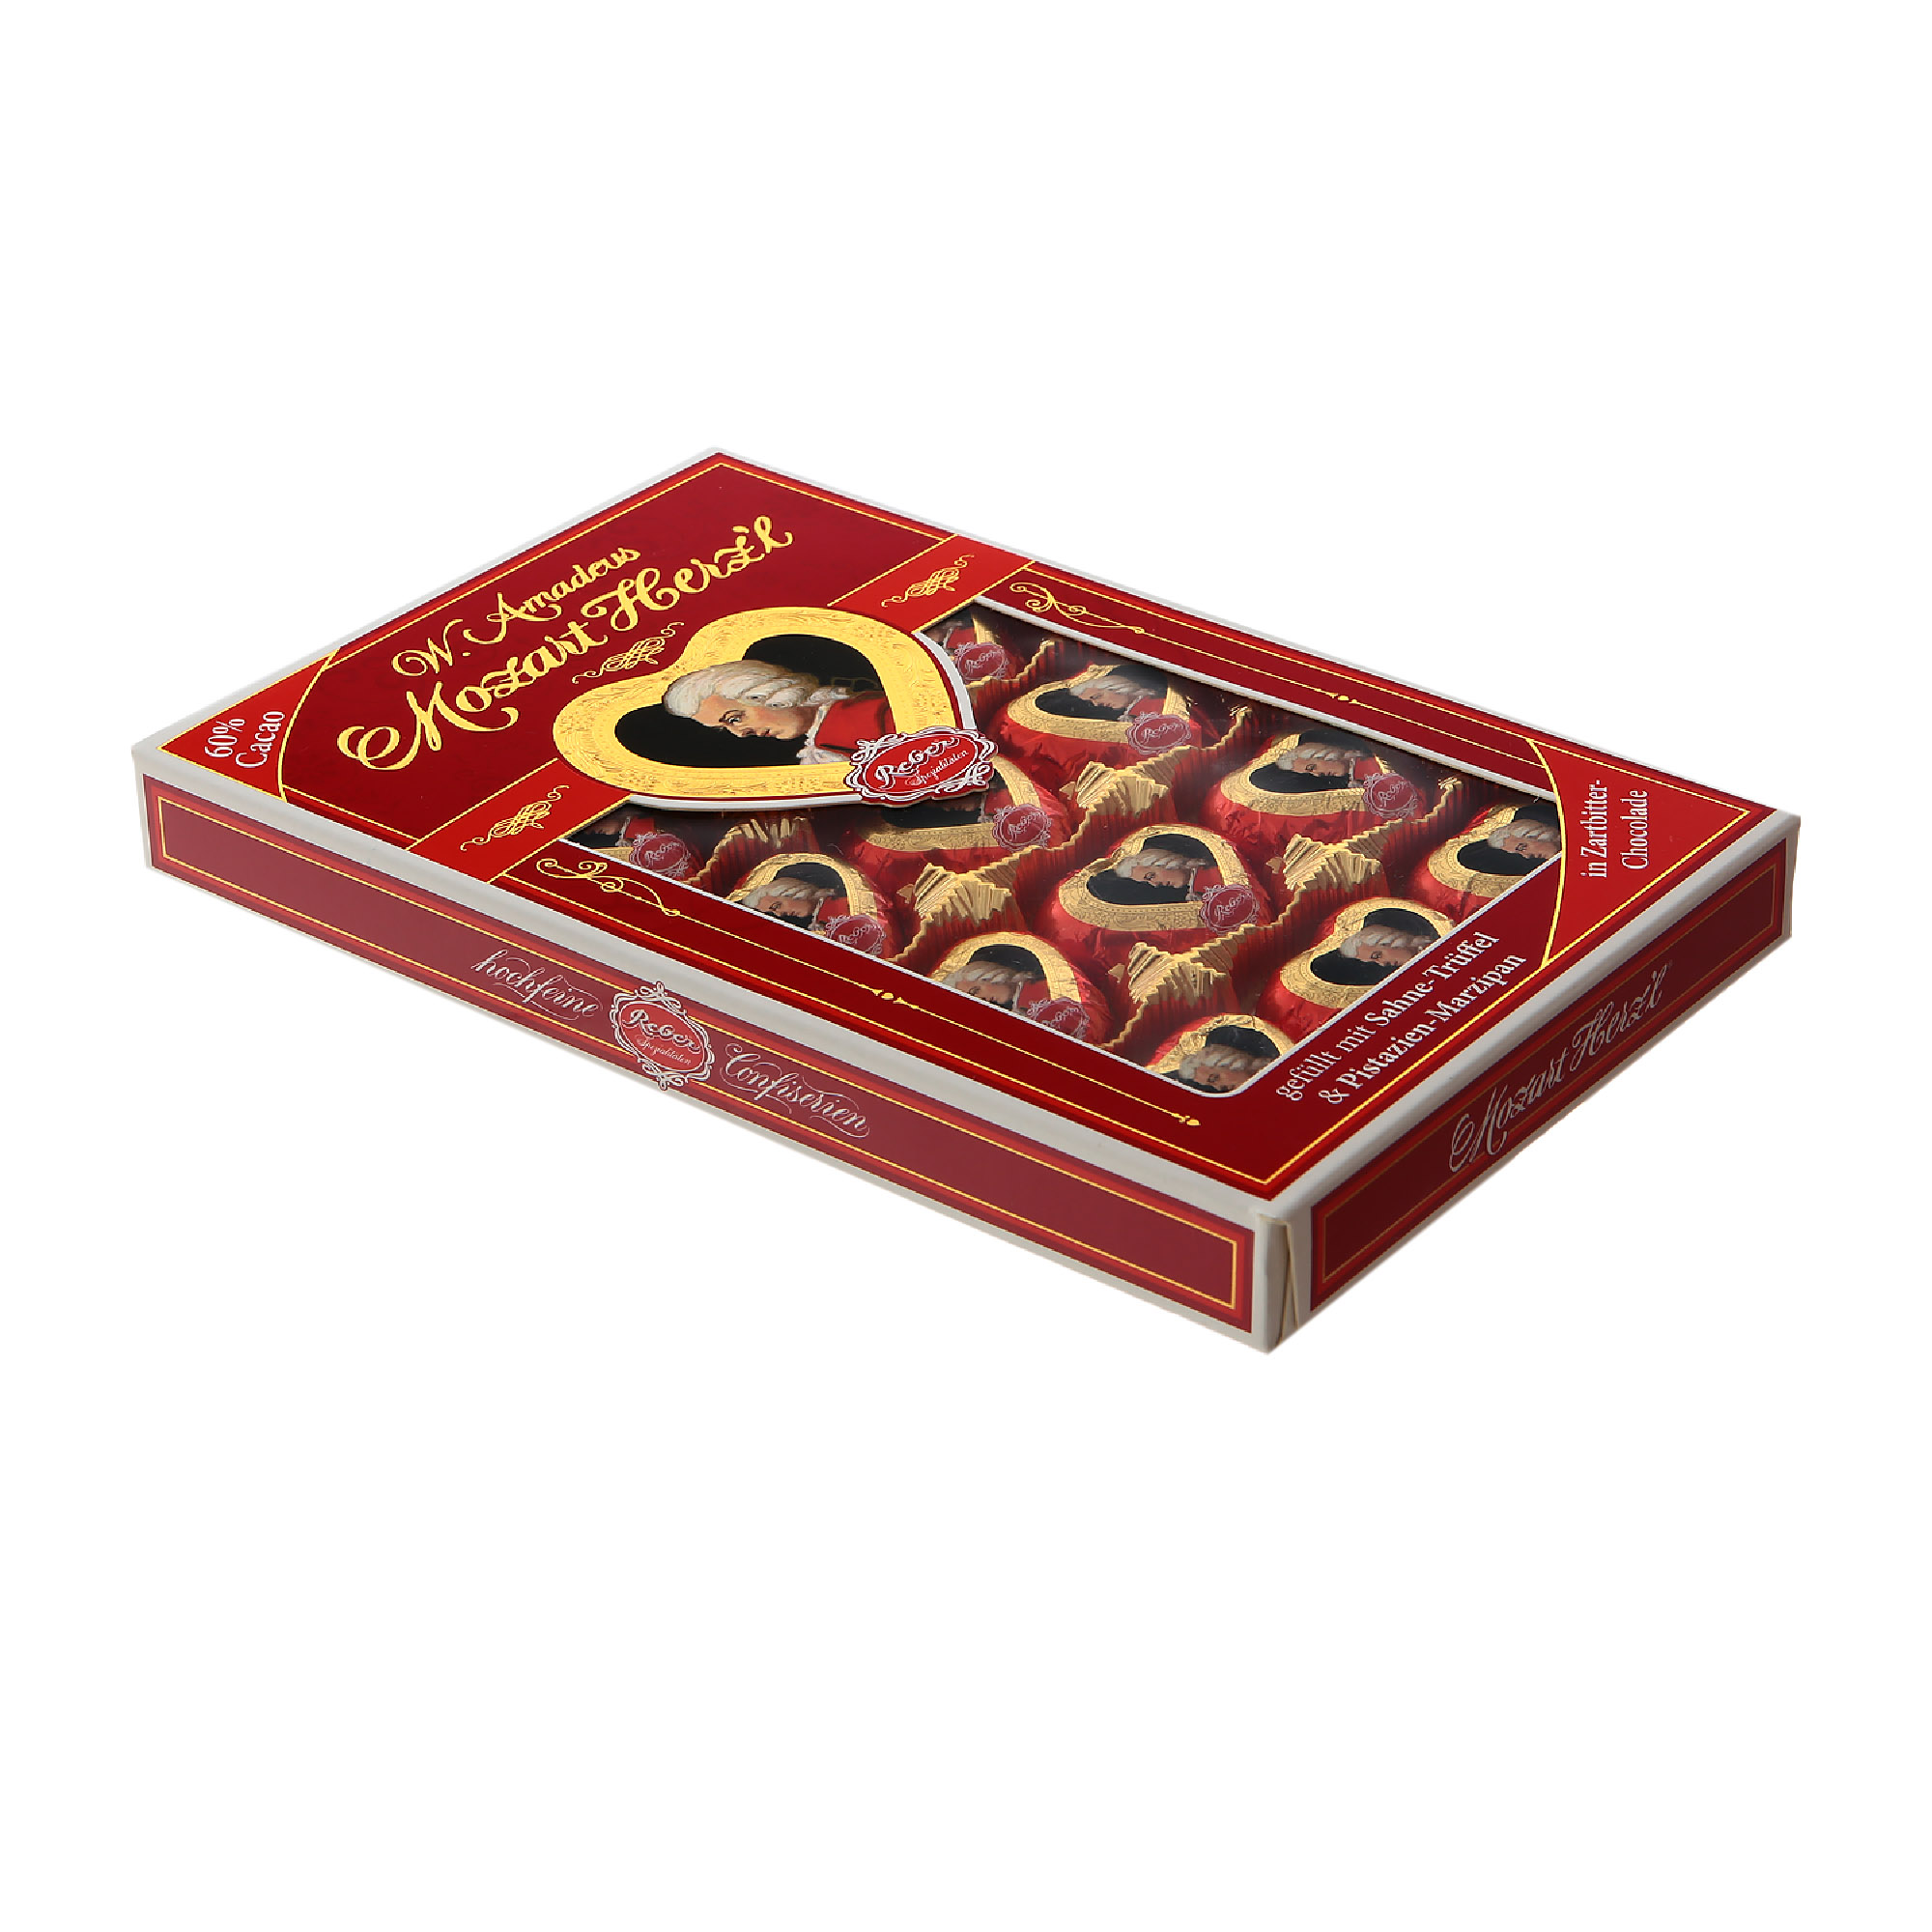 Сердечки шоколадные Reber Моцарт 150 г набор конфет моцарт 830 850 г reber 1410105